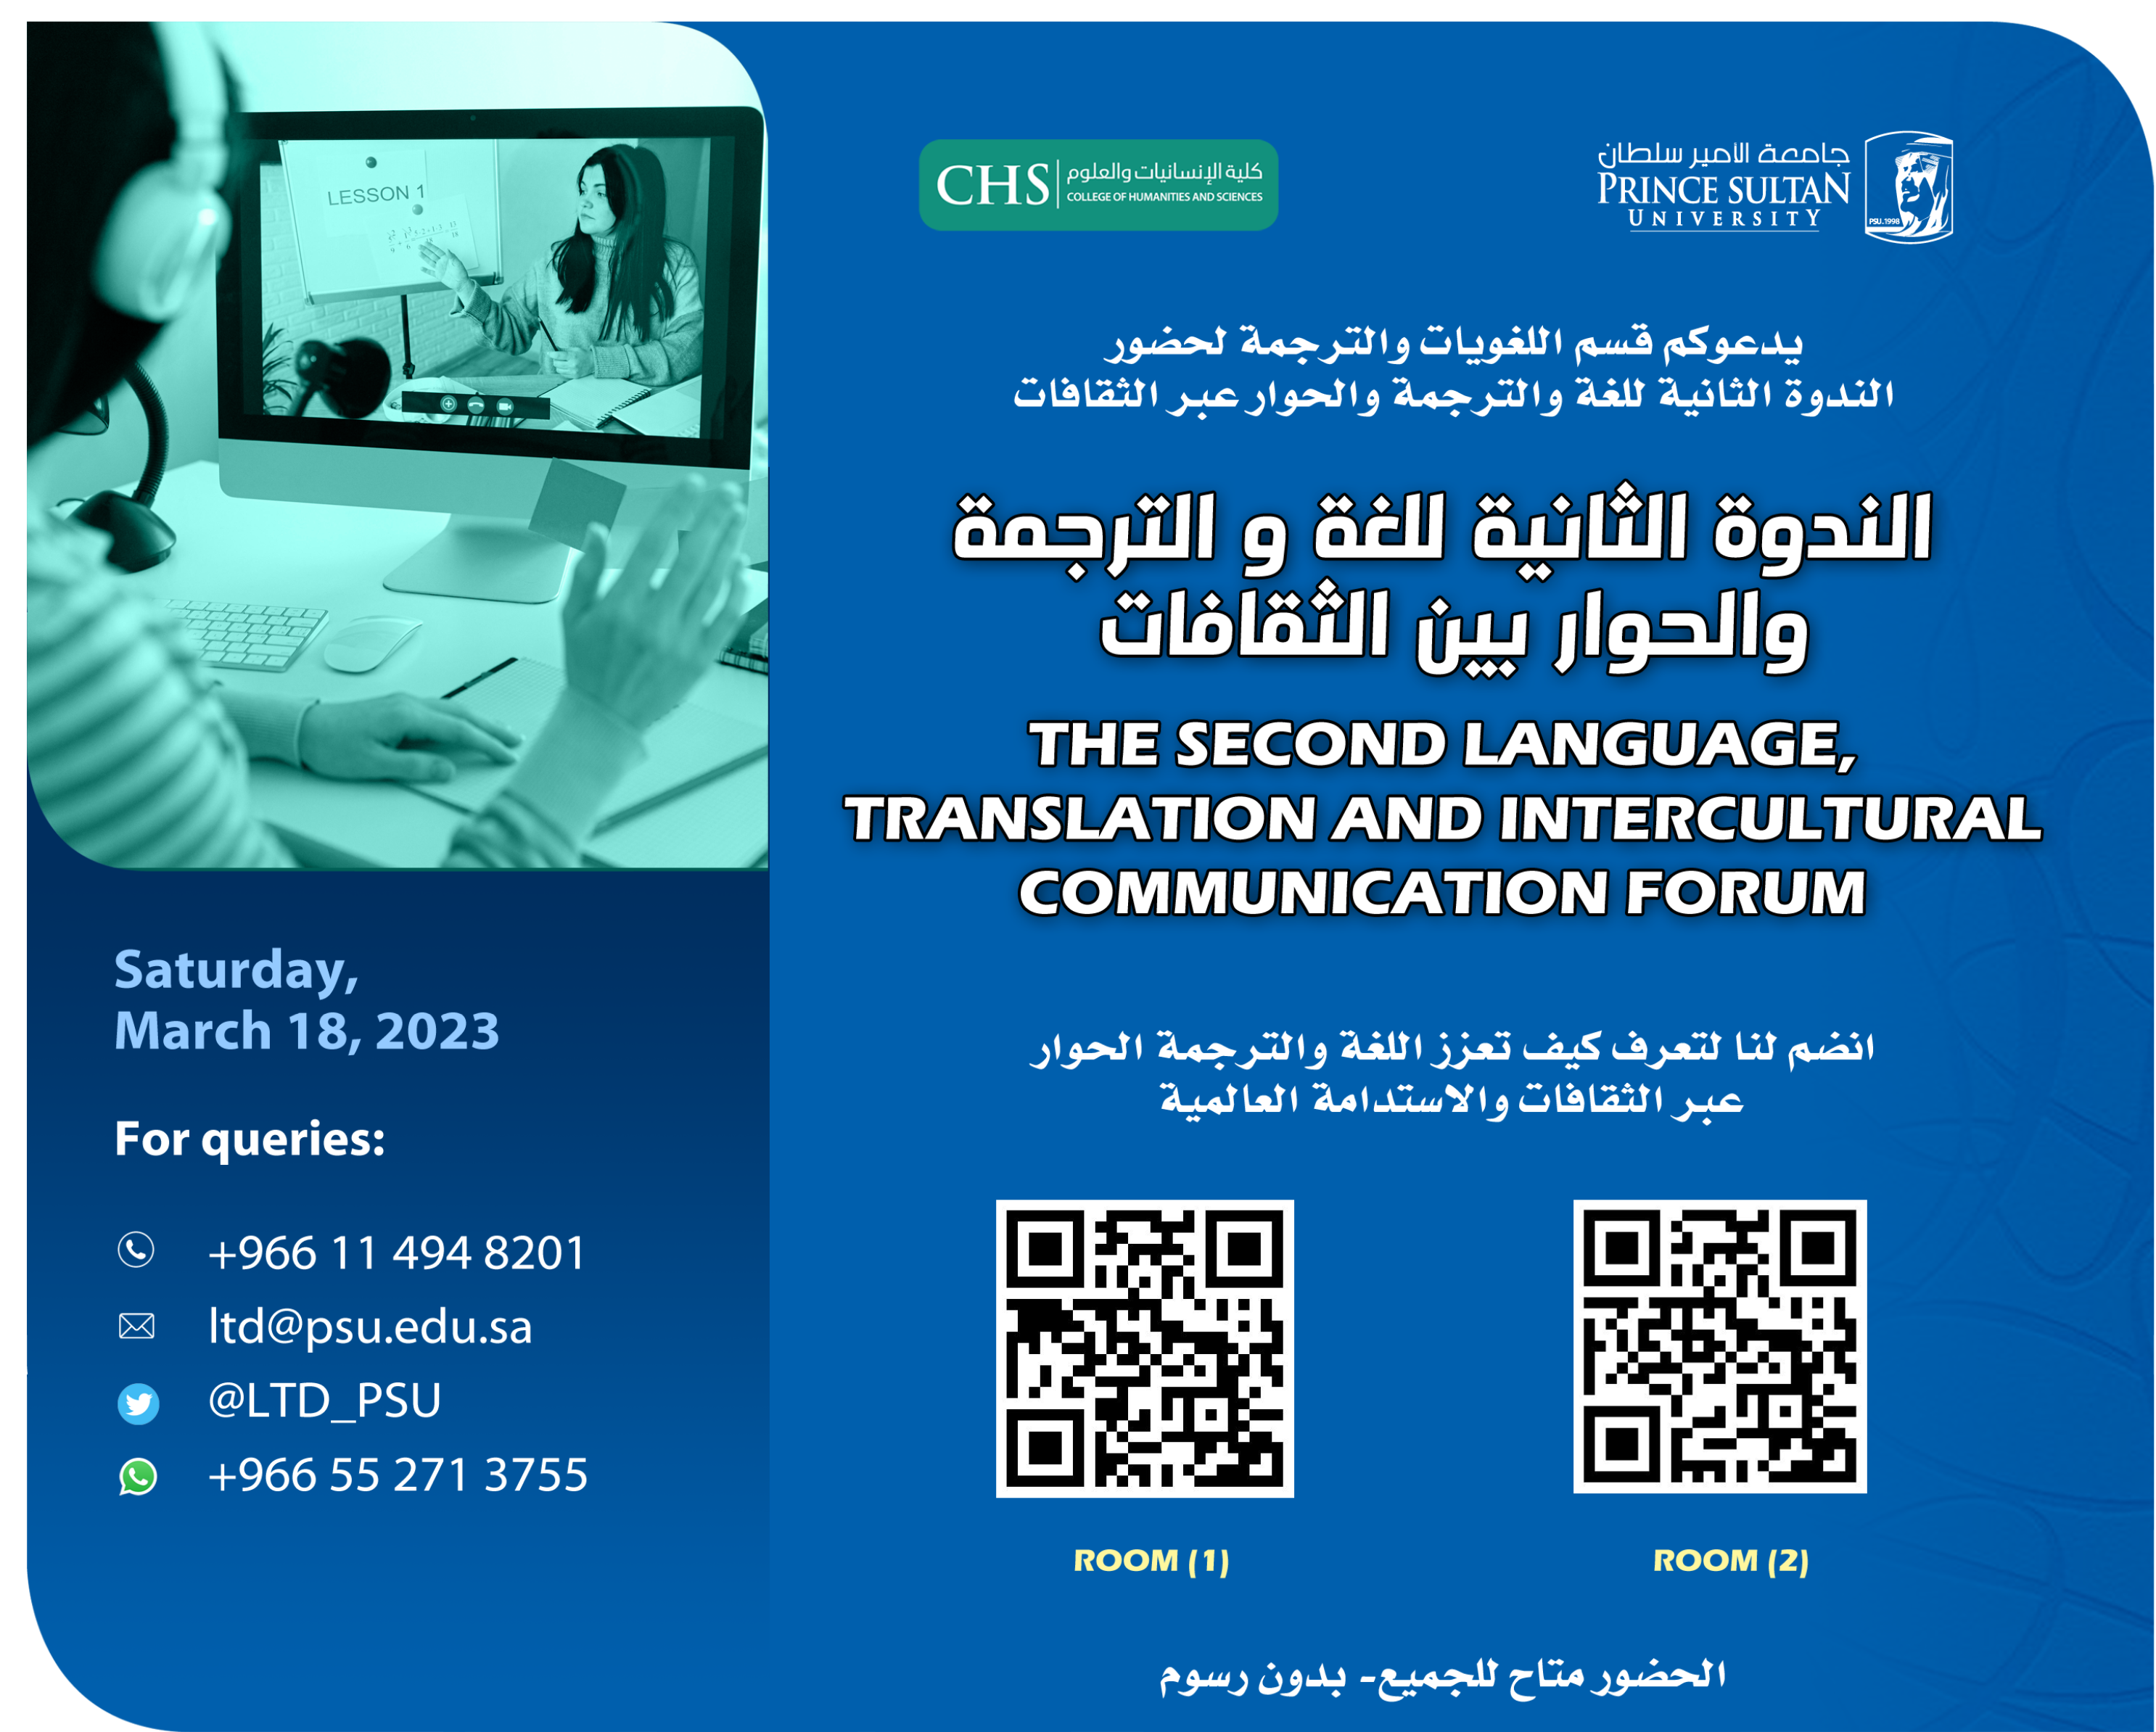 Sat, MAR 18: Language, Translation and Intercultural Communication Forum